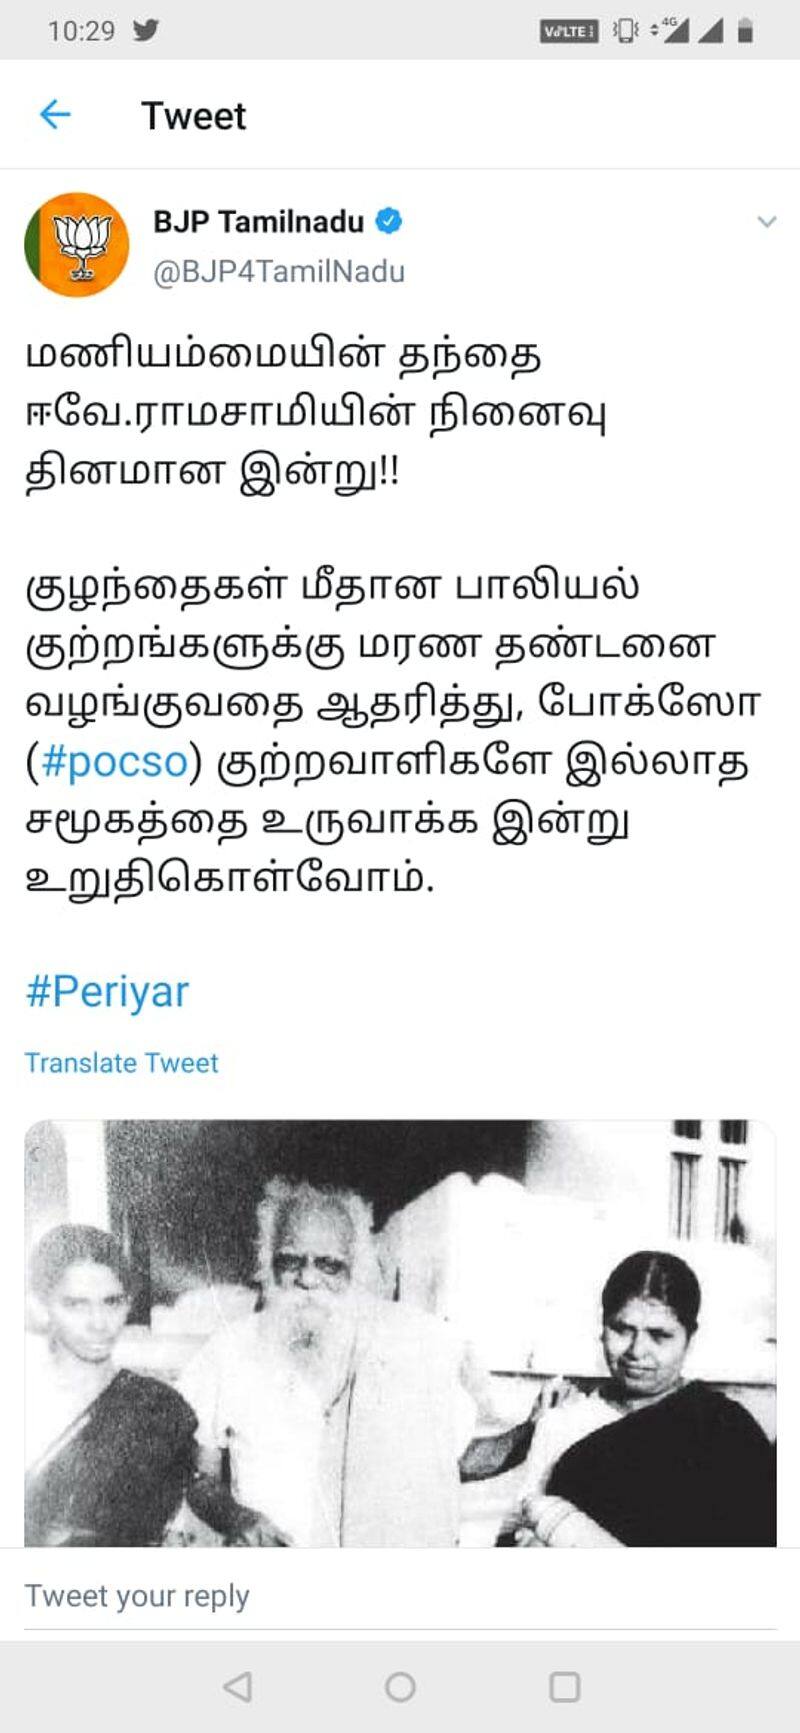 BJP Tamilnadu tweets in a derogatory way about Periyar on his death anniversary